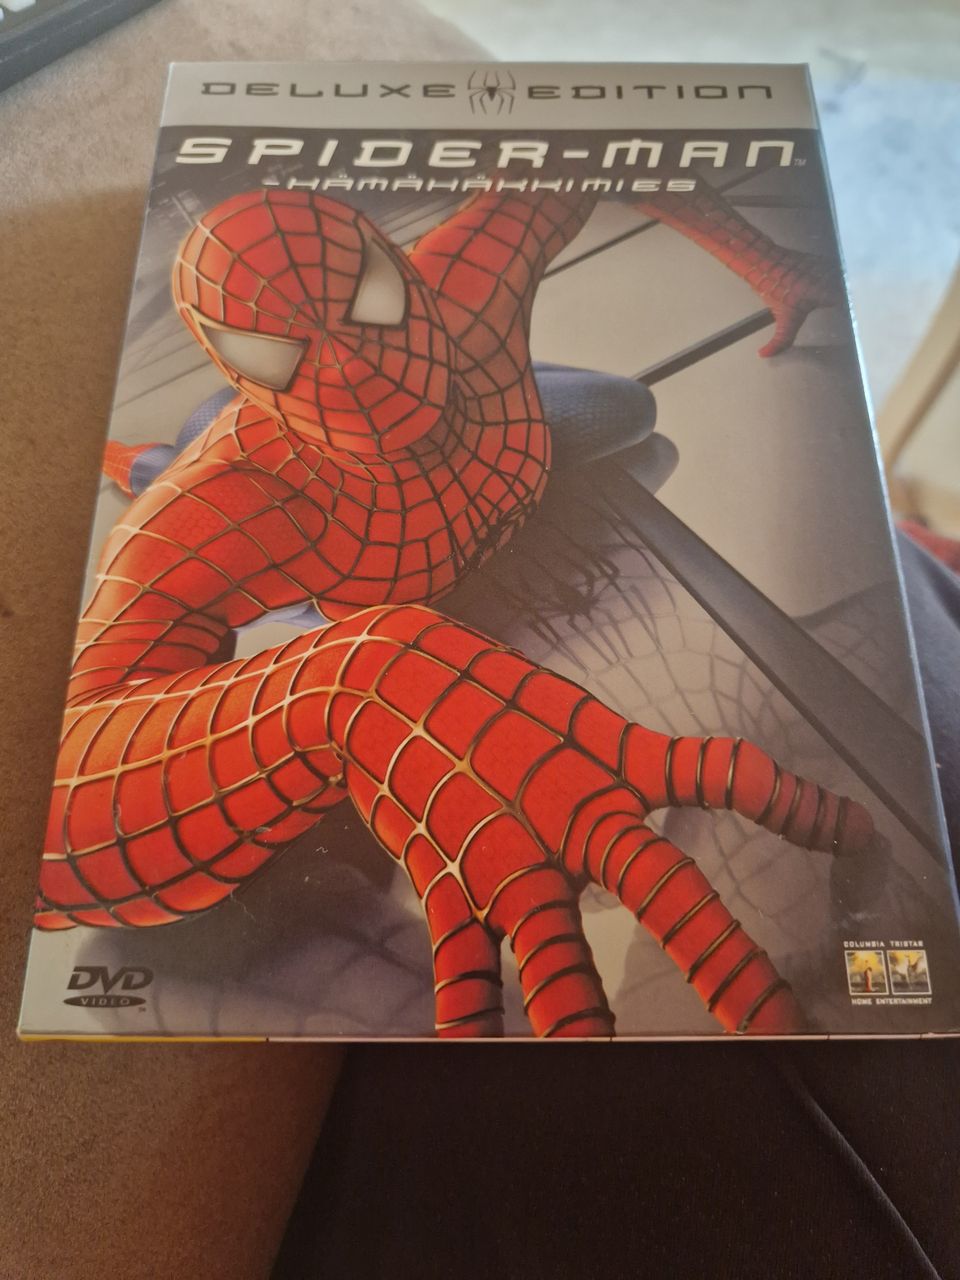 Spider-man deluxe edition dvd